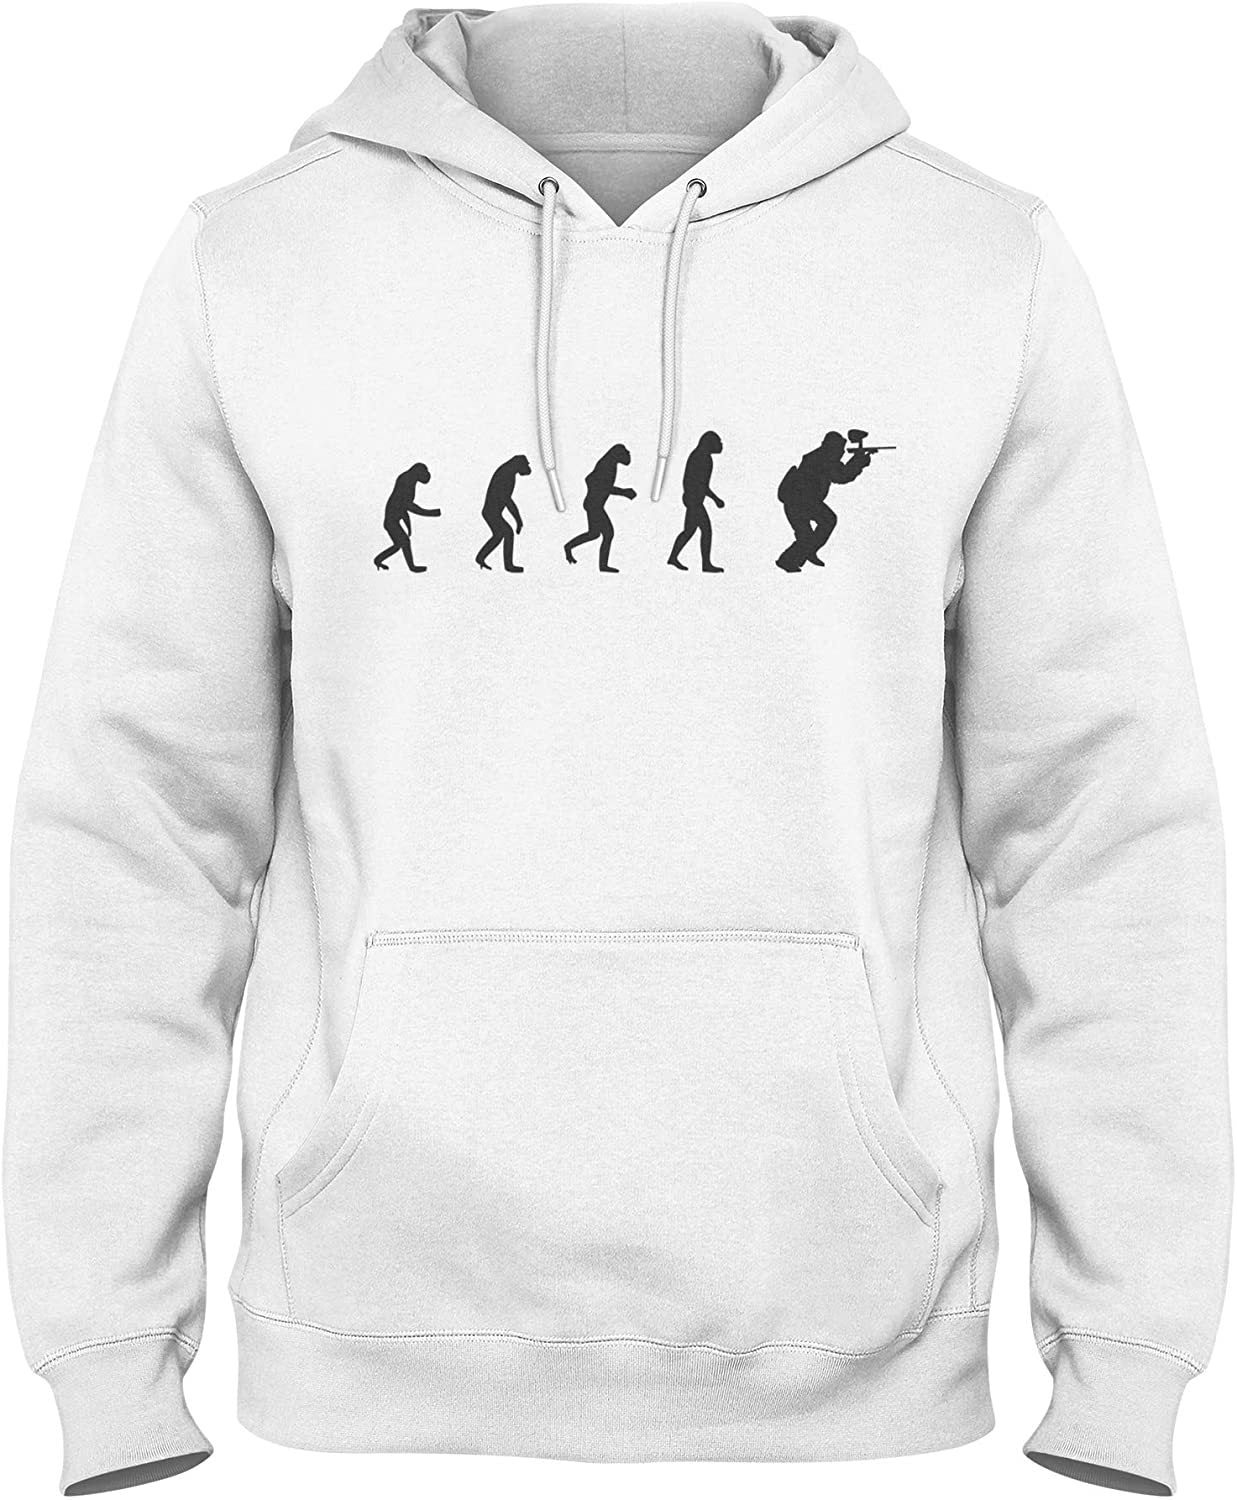 NXY Men's Evolution of Man to Paintball Player Hoodie Sweatshirt